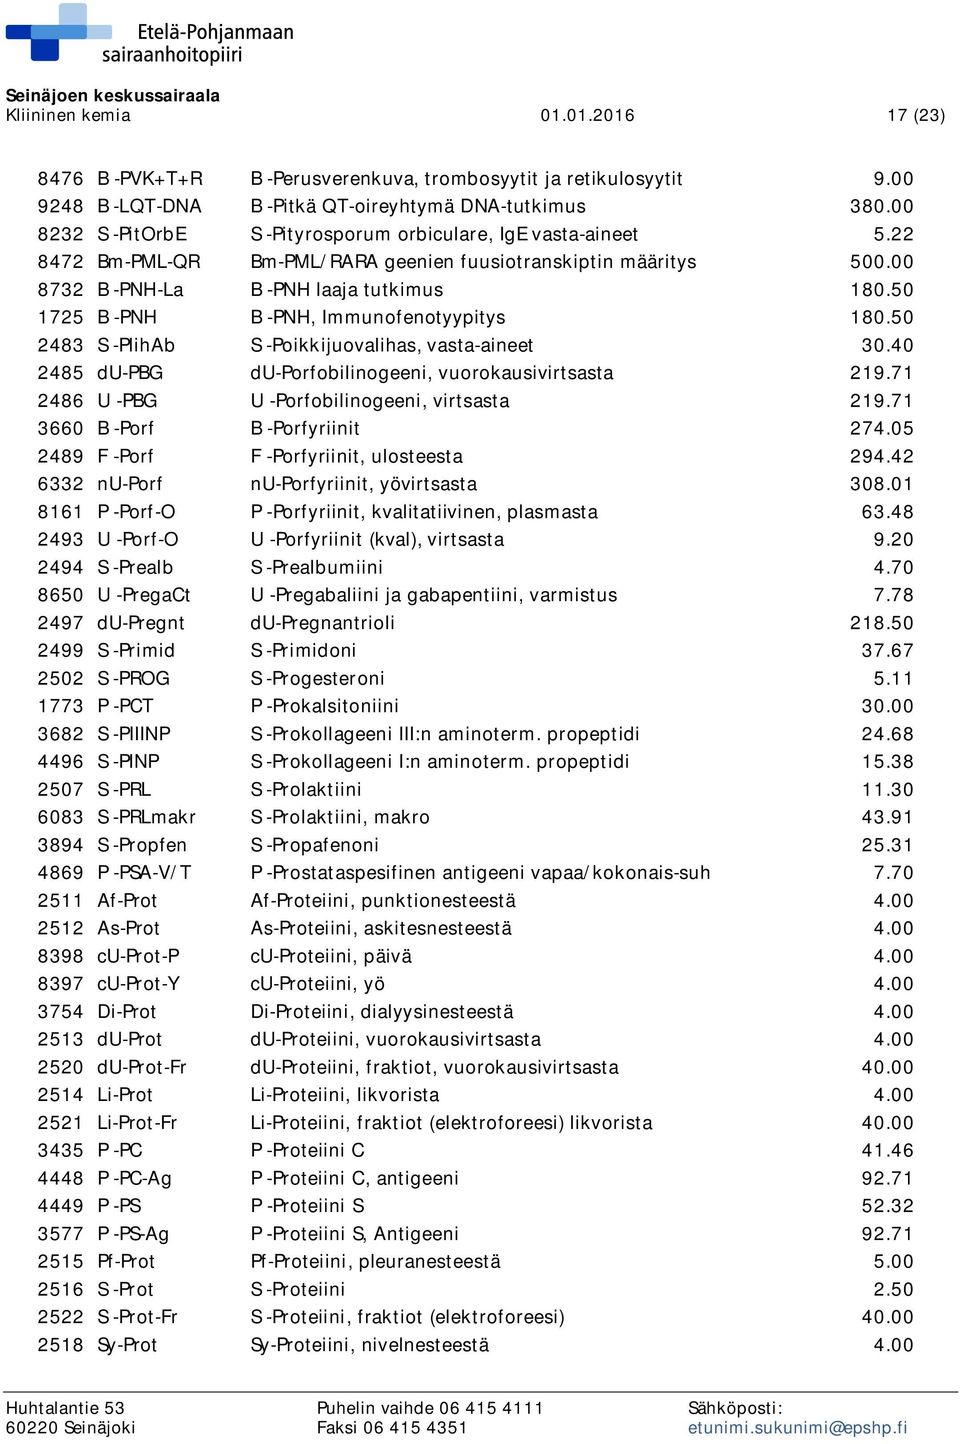 50 1725 B -PNH B -PNH, Immunofenotyypitys 180.50 2483 S -PlihAb S -Poikkijuovalihas, vasta-aineet 30.40 2485 du-pbg du-porfobilinogeeni, vuorokausivirtsasta 219.